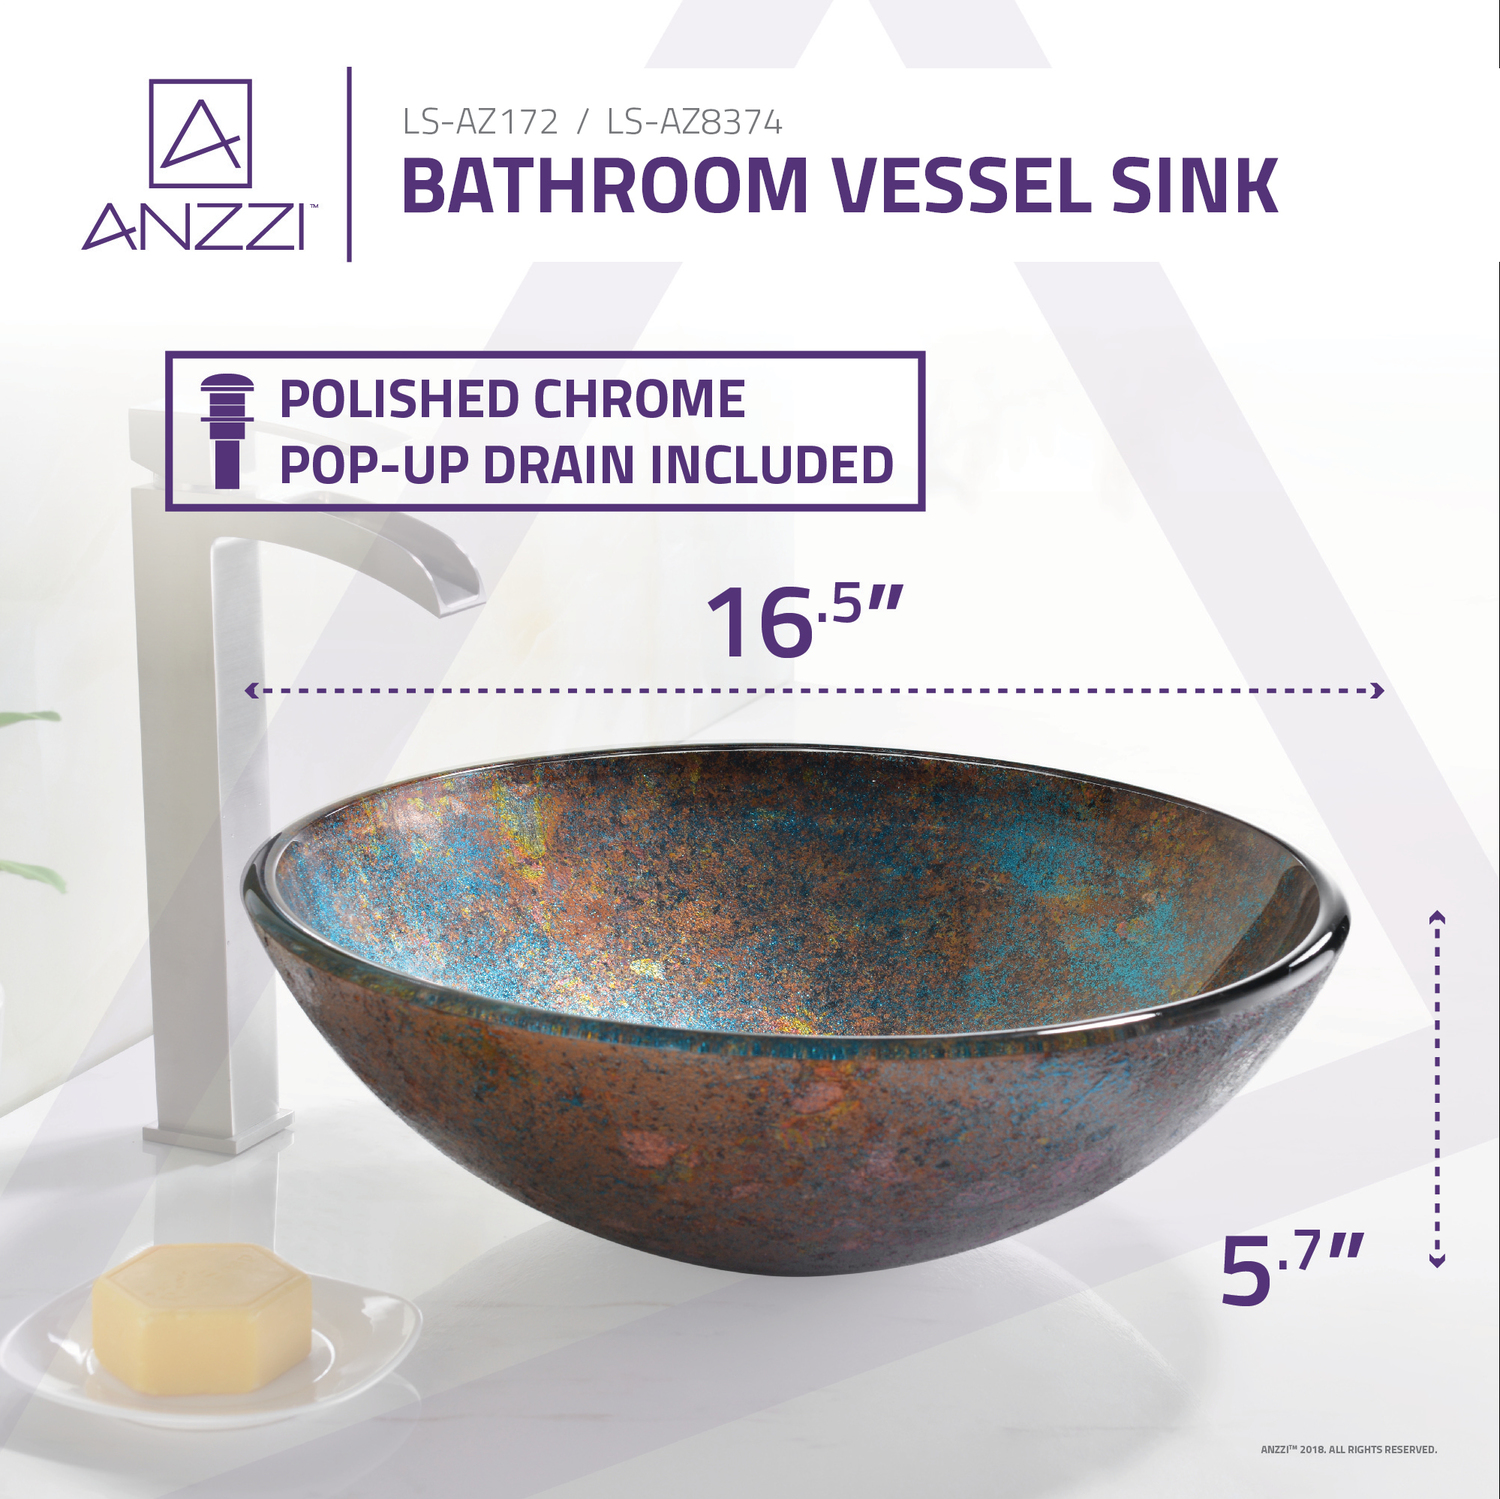 black restroom Anzzi BATHROOM - Sinks - Vessel - Tempered Glass Multi-Colored